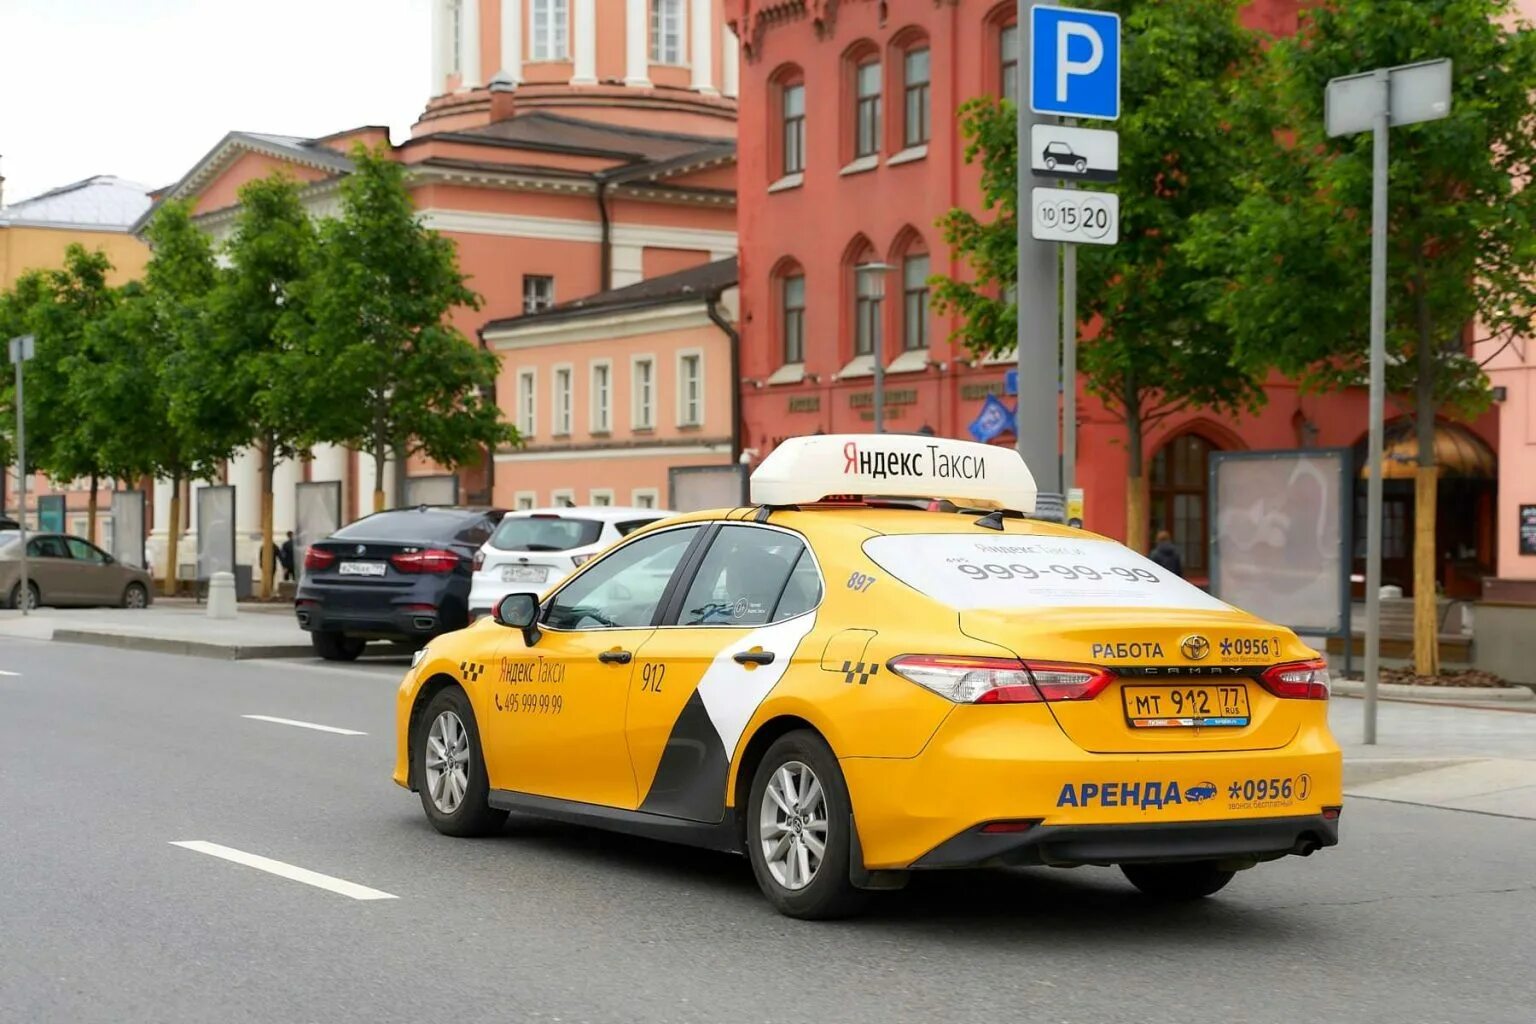 Поддержка такси в москве. Таха машина.